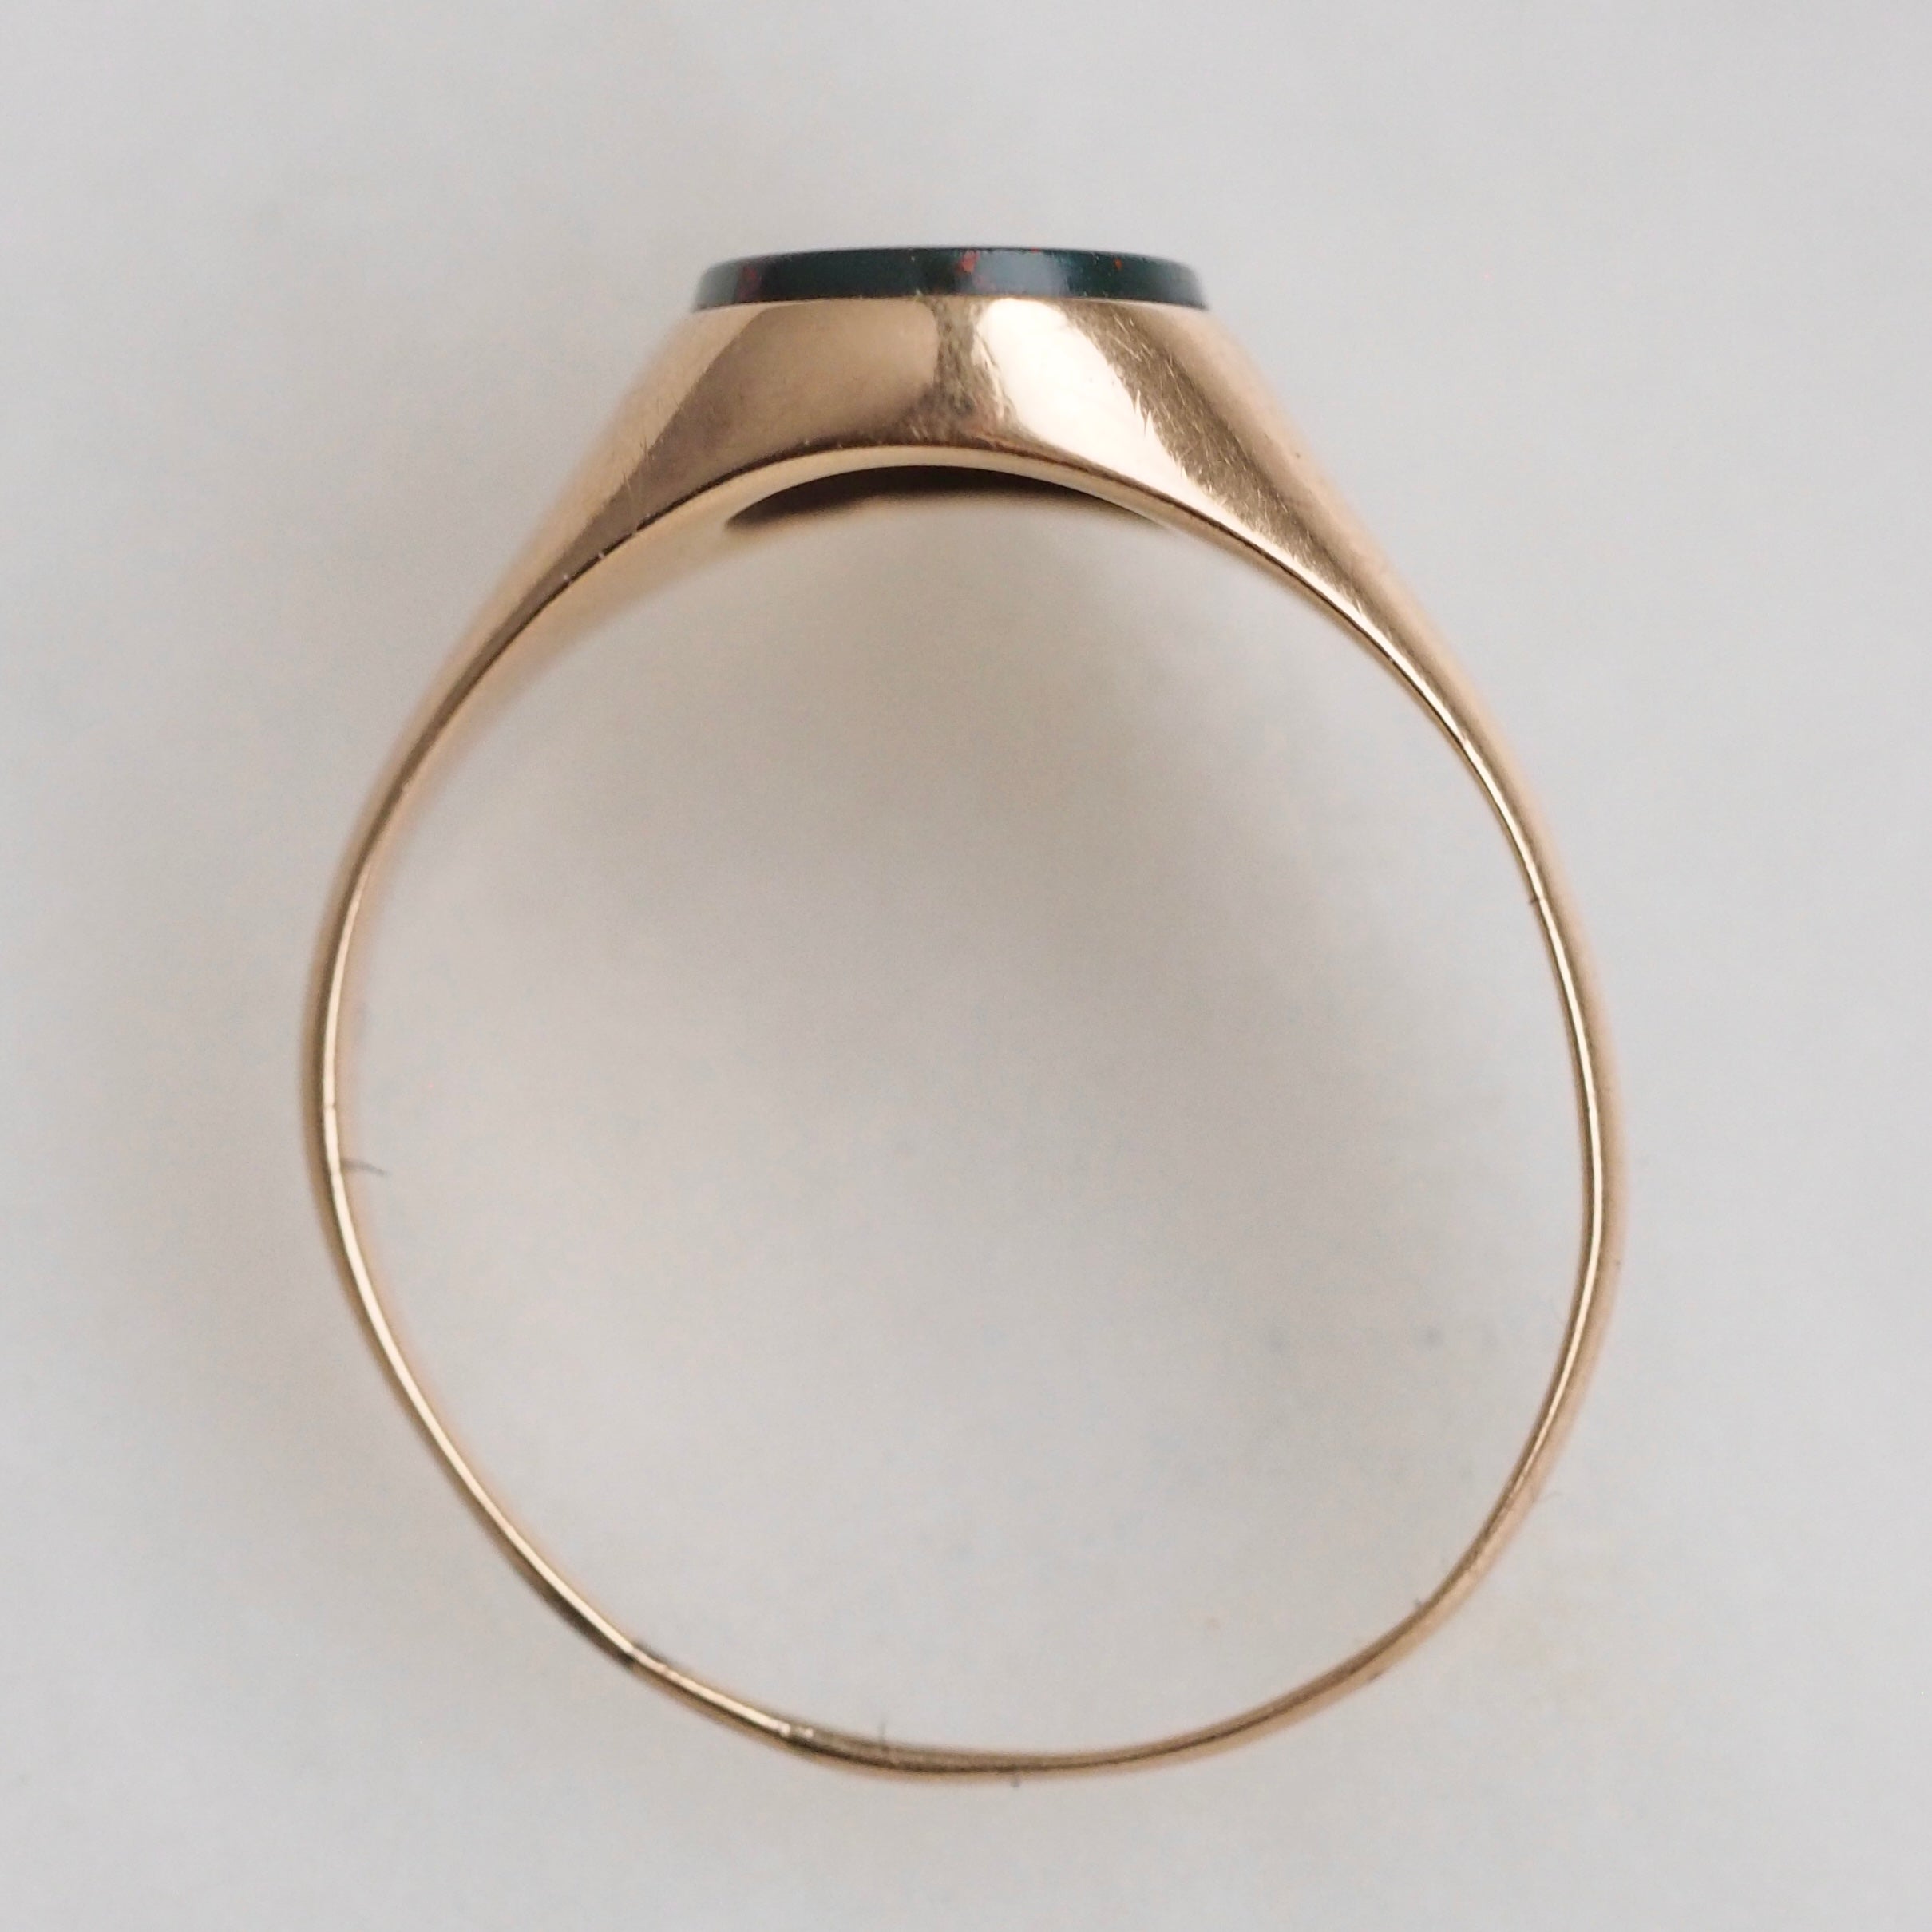 Antique 10k Gold Bloodstone Hermes/Mercury Intaglio Signet Ring